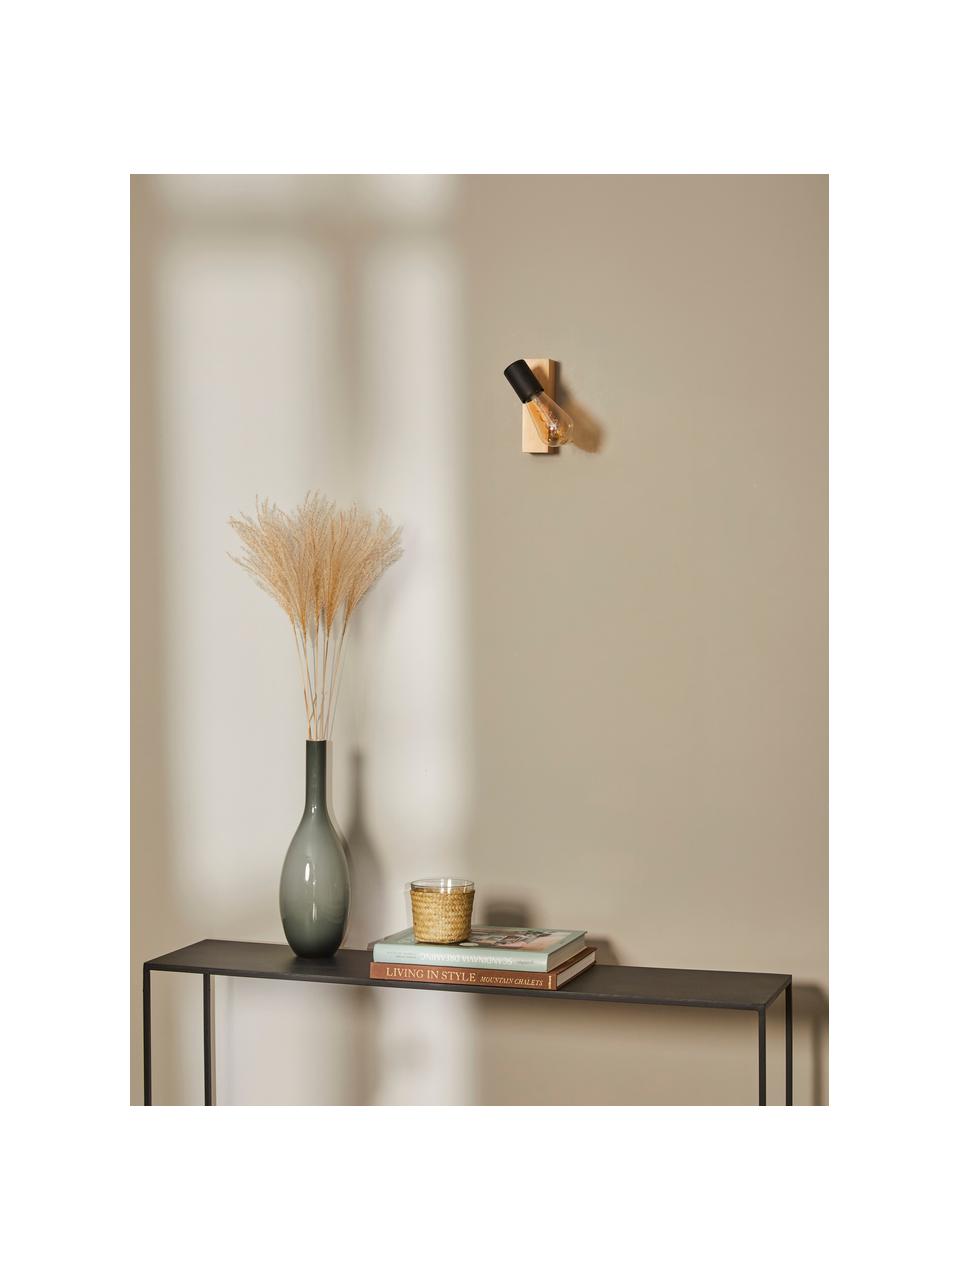 Verstelbare wandlamp Townshend van hout, Fitting: gecoat metaal, Zwart, helder hout, D 9 x H 17 cm